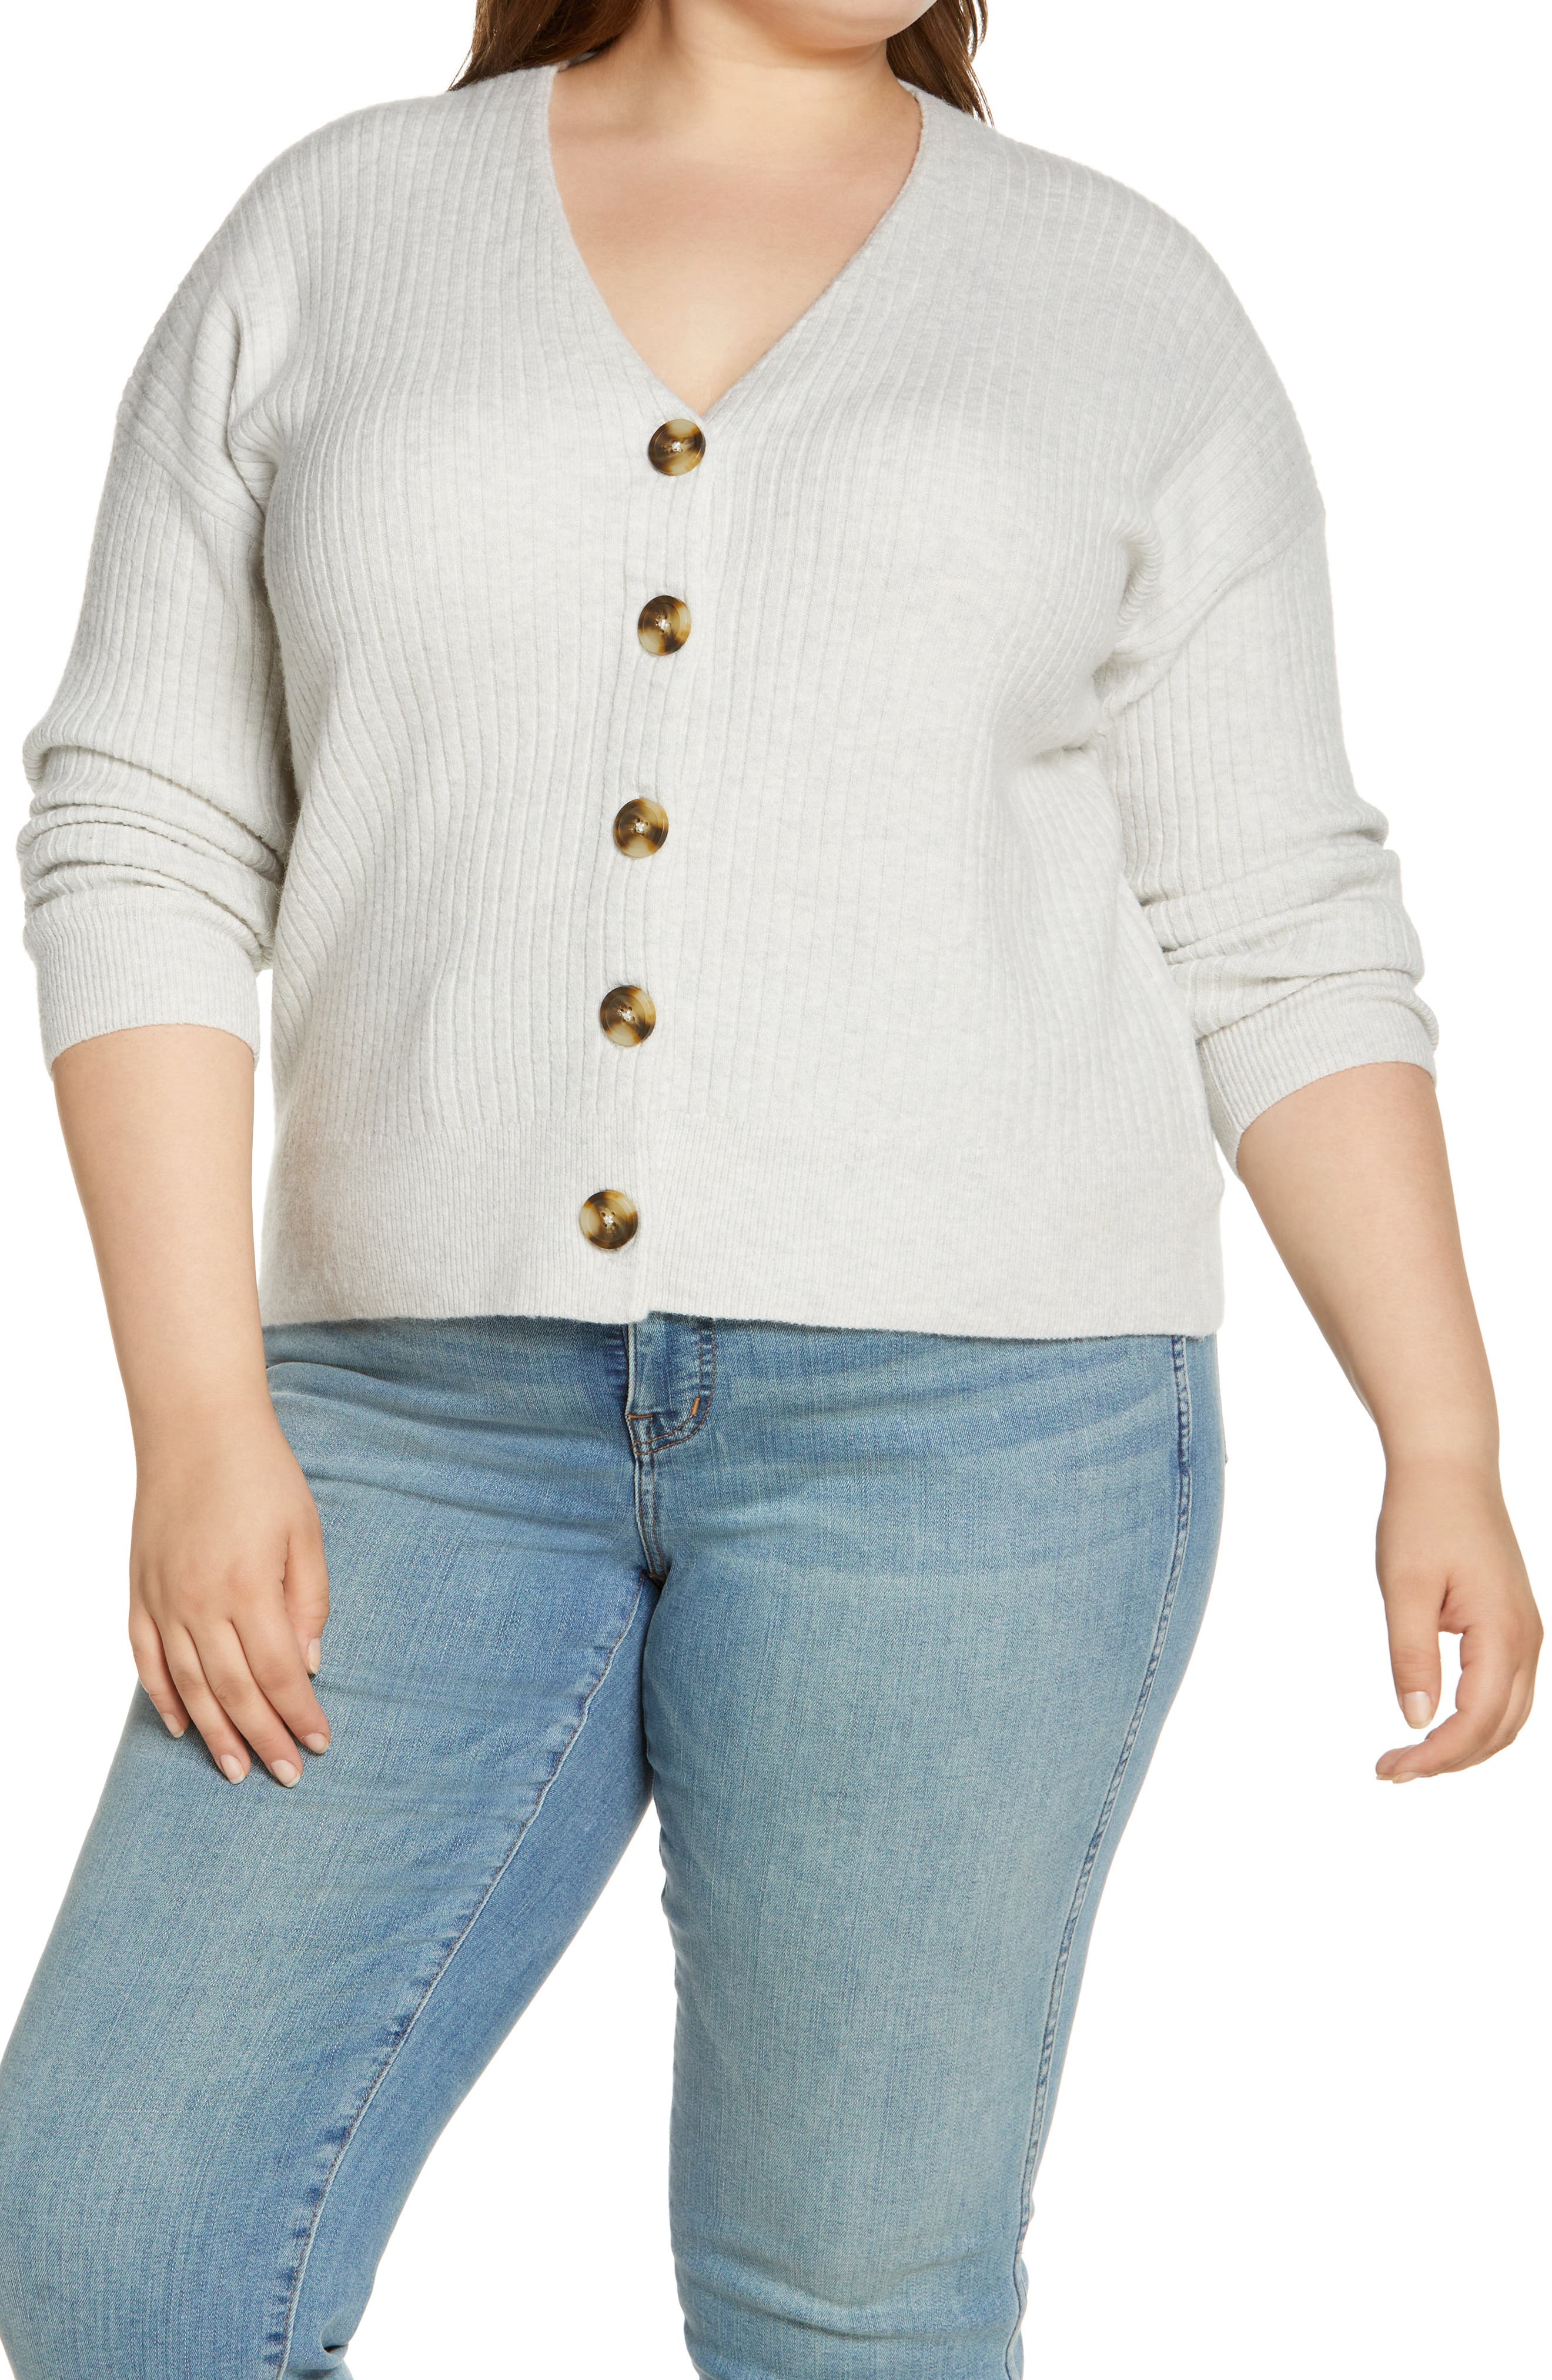 in Sizes XL,1X,2X, Sweater New Women's Plus Size Short Sleeve Grey Cardigan 